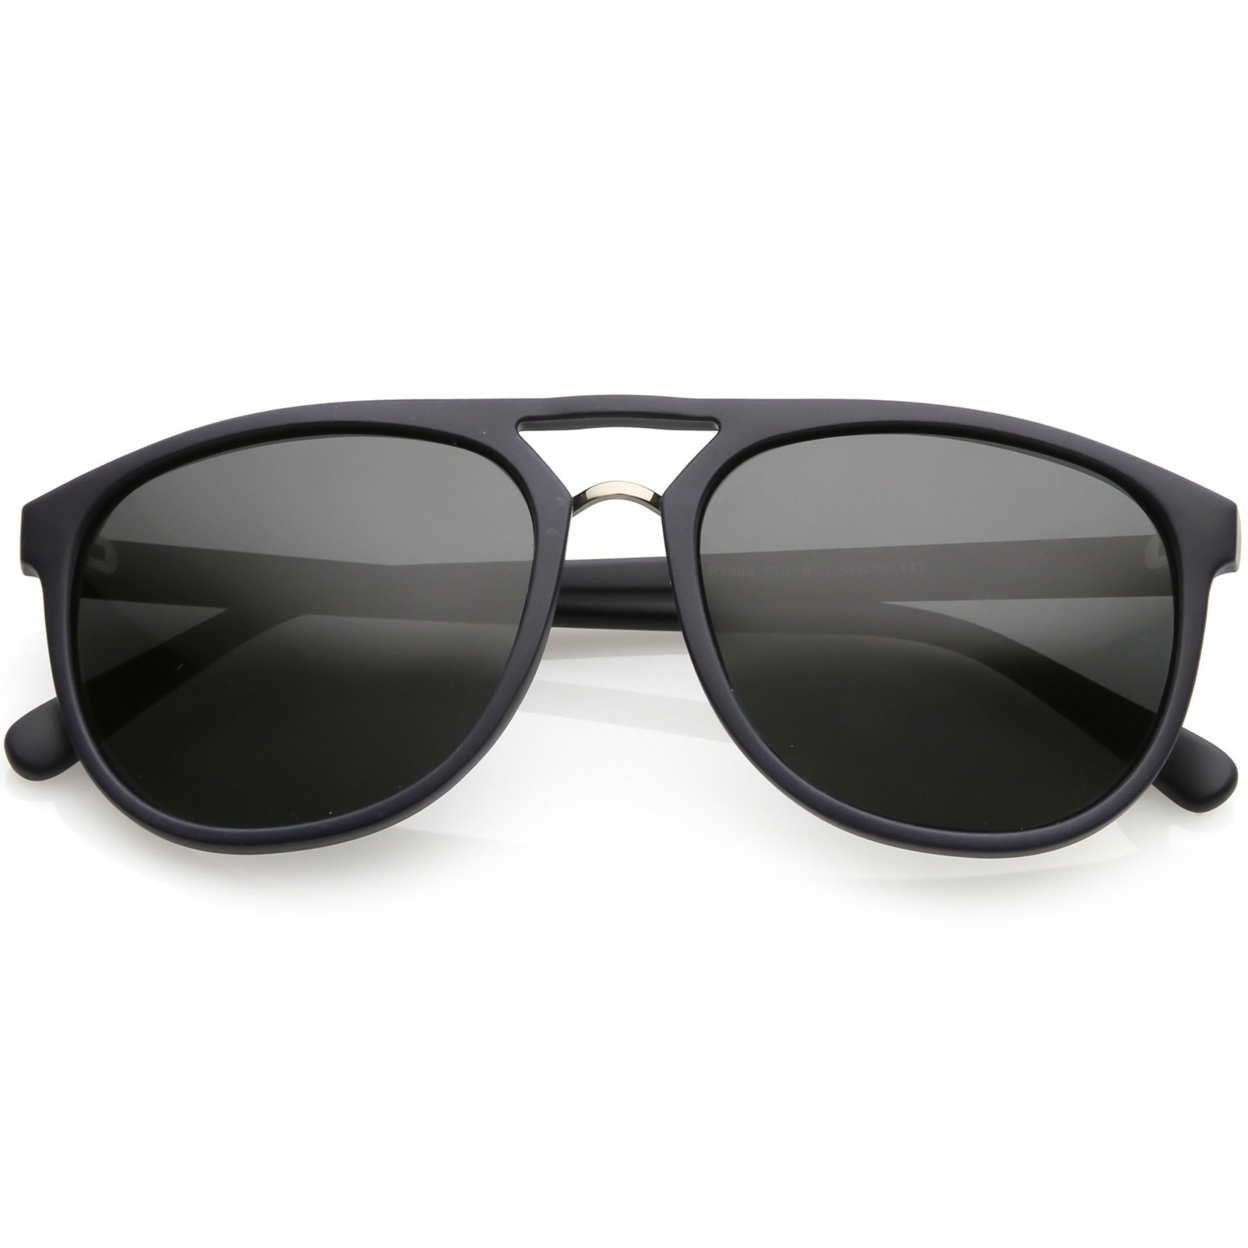 Premium Polarized Flat Top Aviator Sunglasses Metal Nose Bridge Round Lens 55mm - Rubberized Matte Black / Green